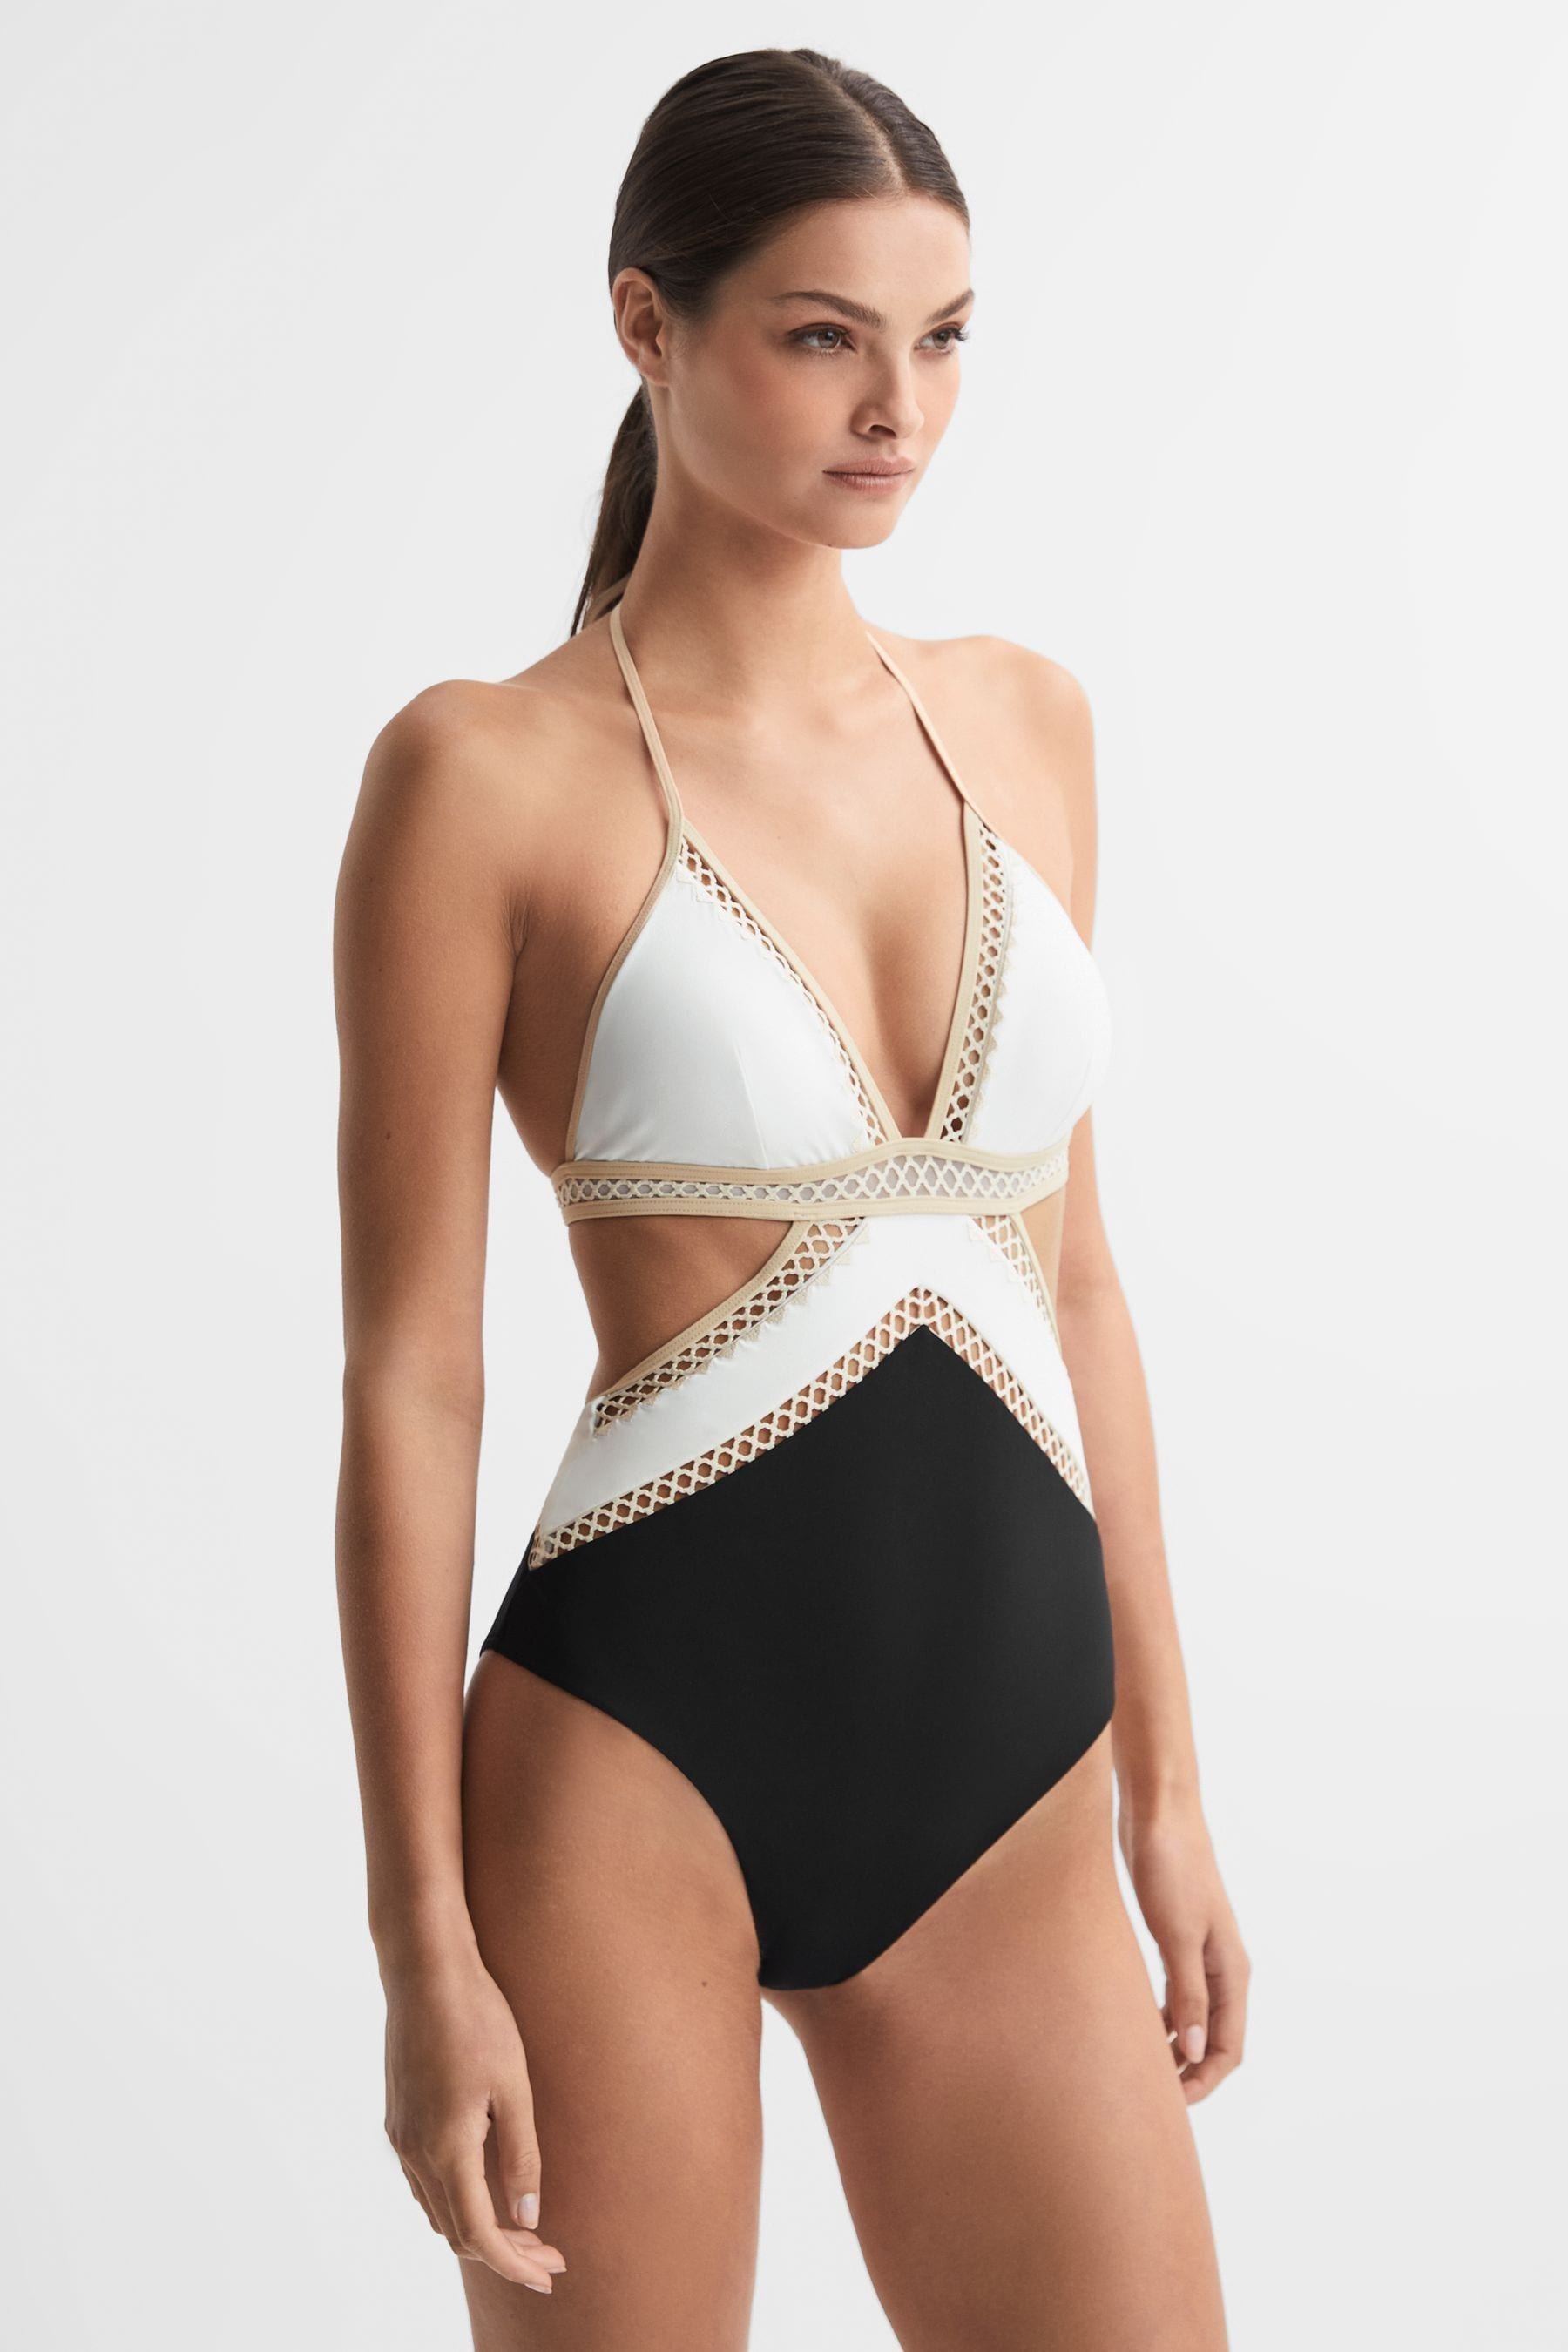 Reiss Savannah - Black/white Lattice Halterneck Swimsuit, Us 4